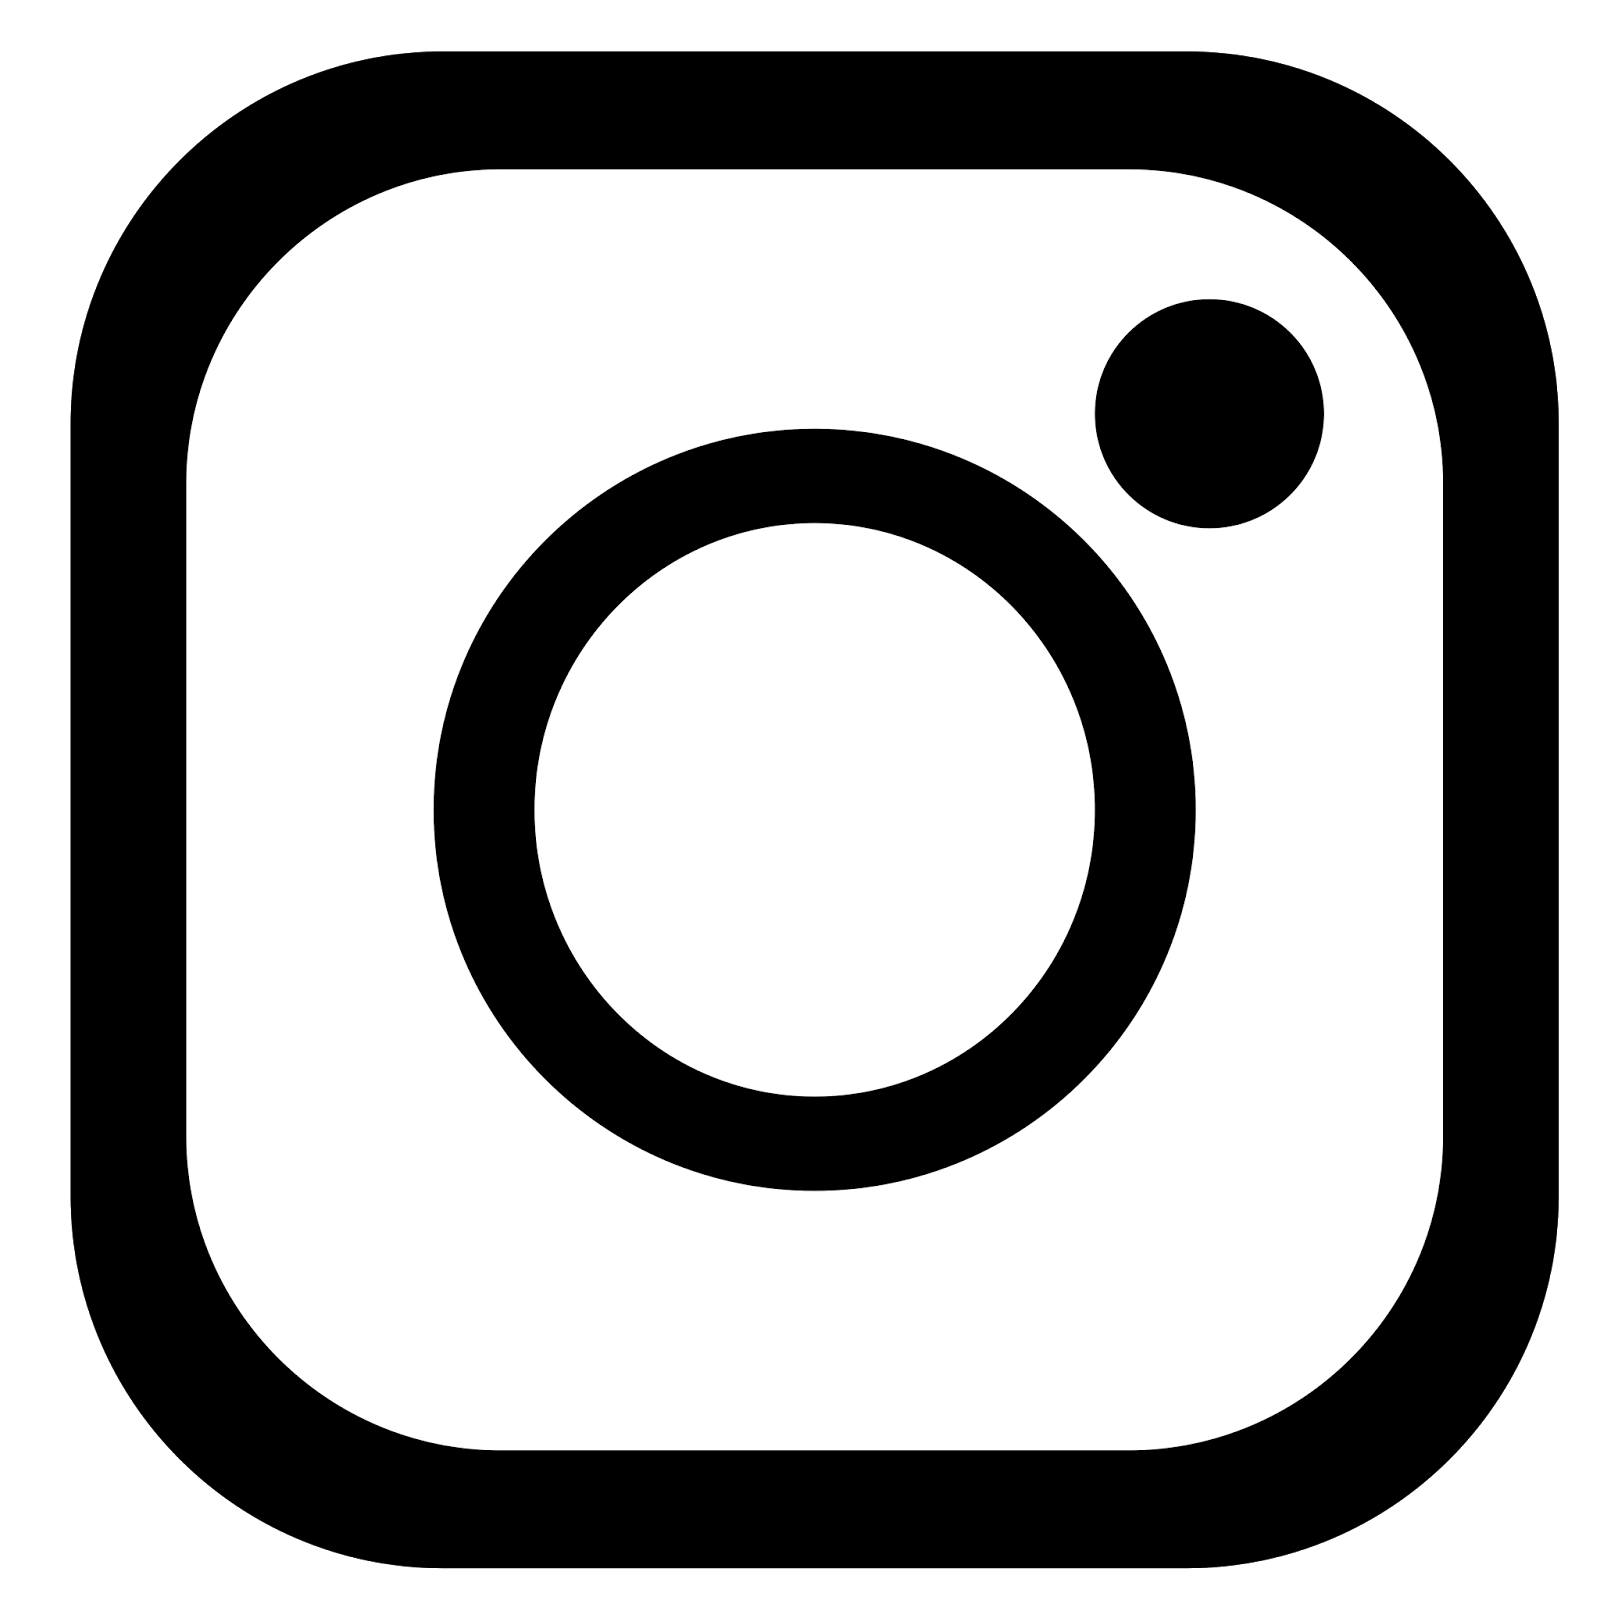 Logo psd images gallery. Instagram clipart hi res